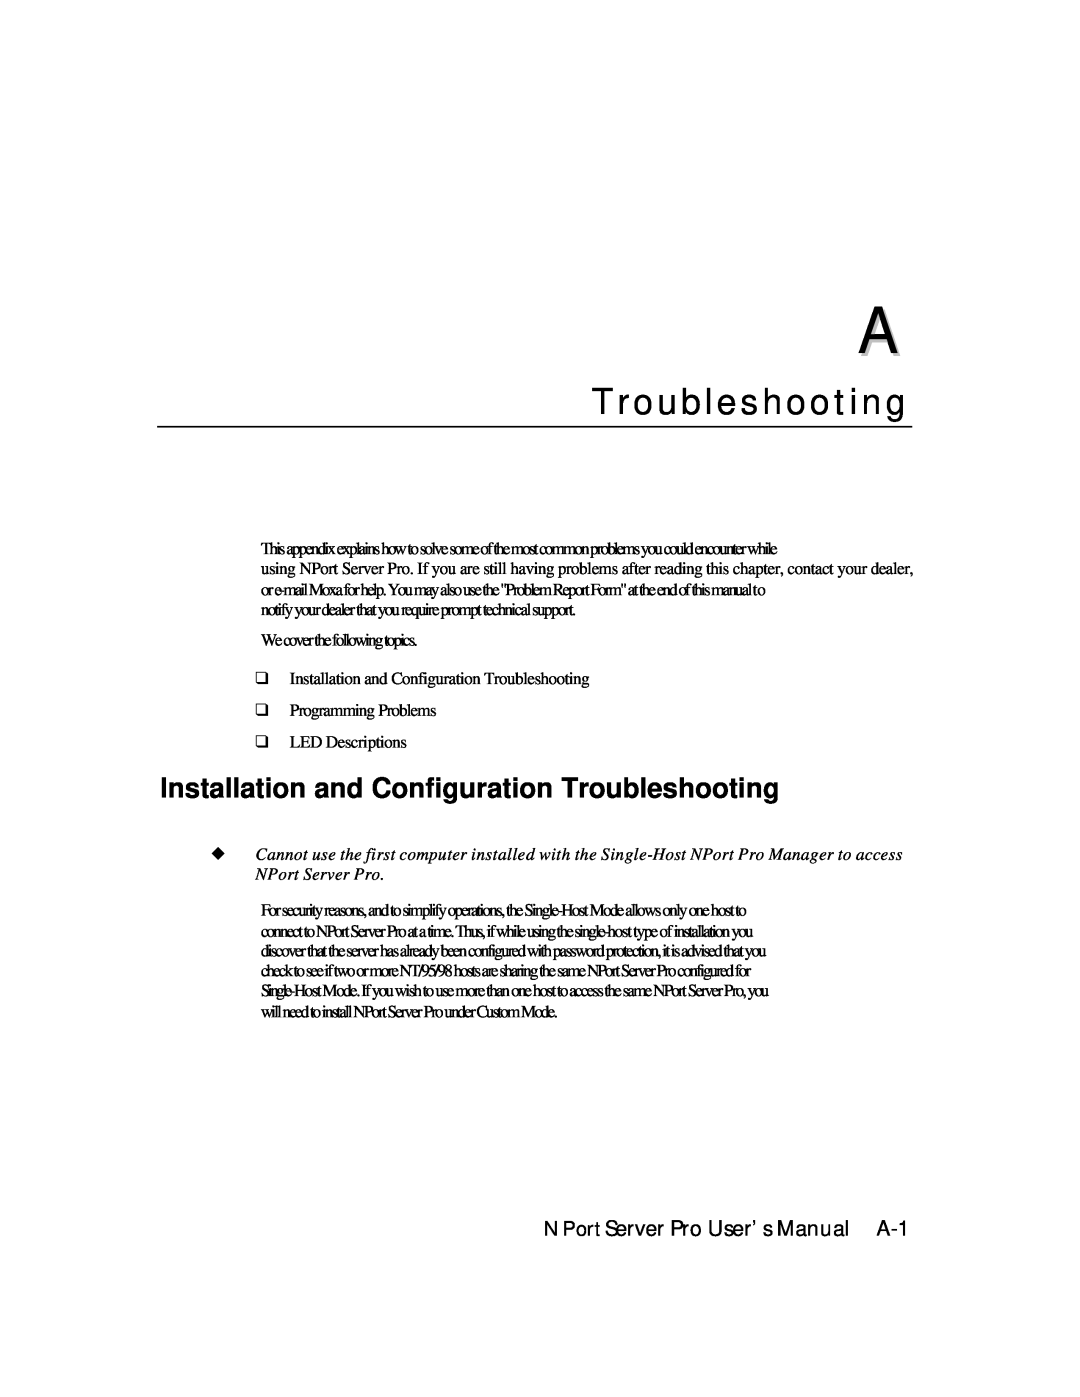 Moxa Technologies DE-308, DE-303 Installation and Configuration Troubleshooting, NPort Server Pro User’s Manual A-1 